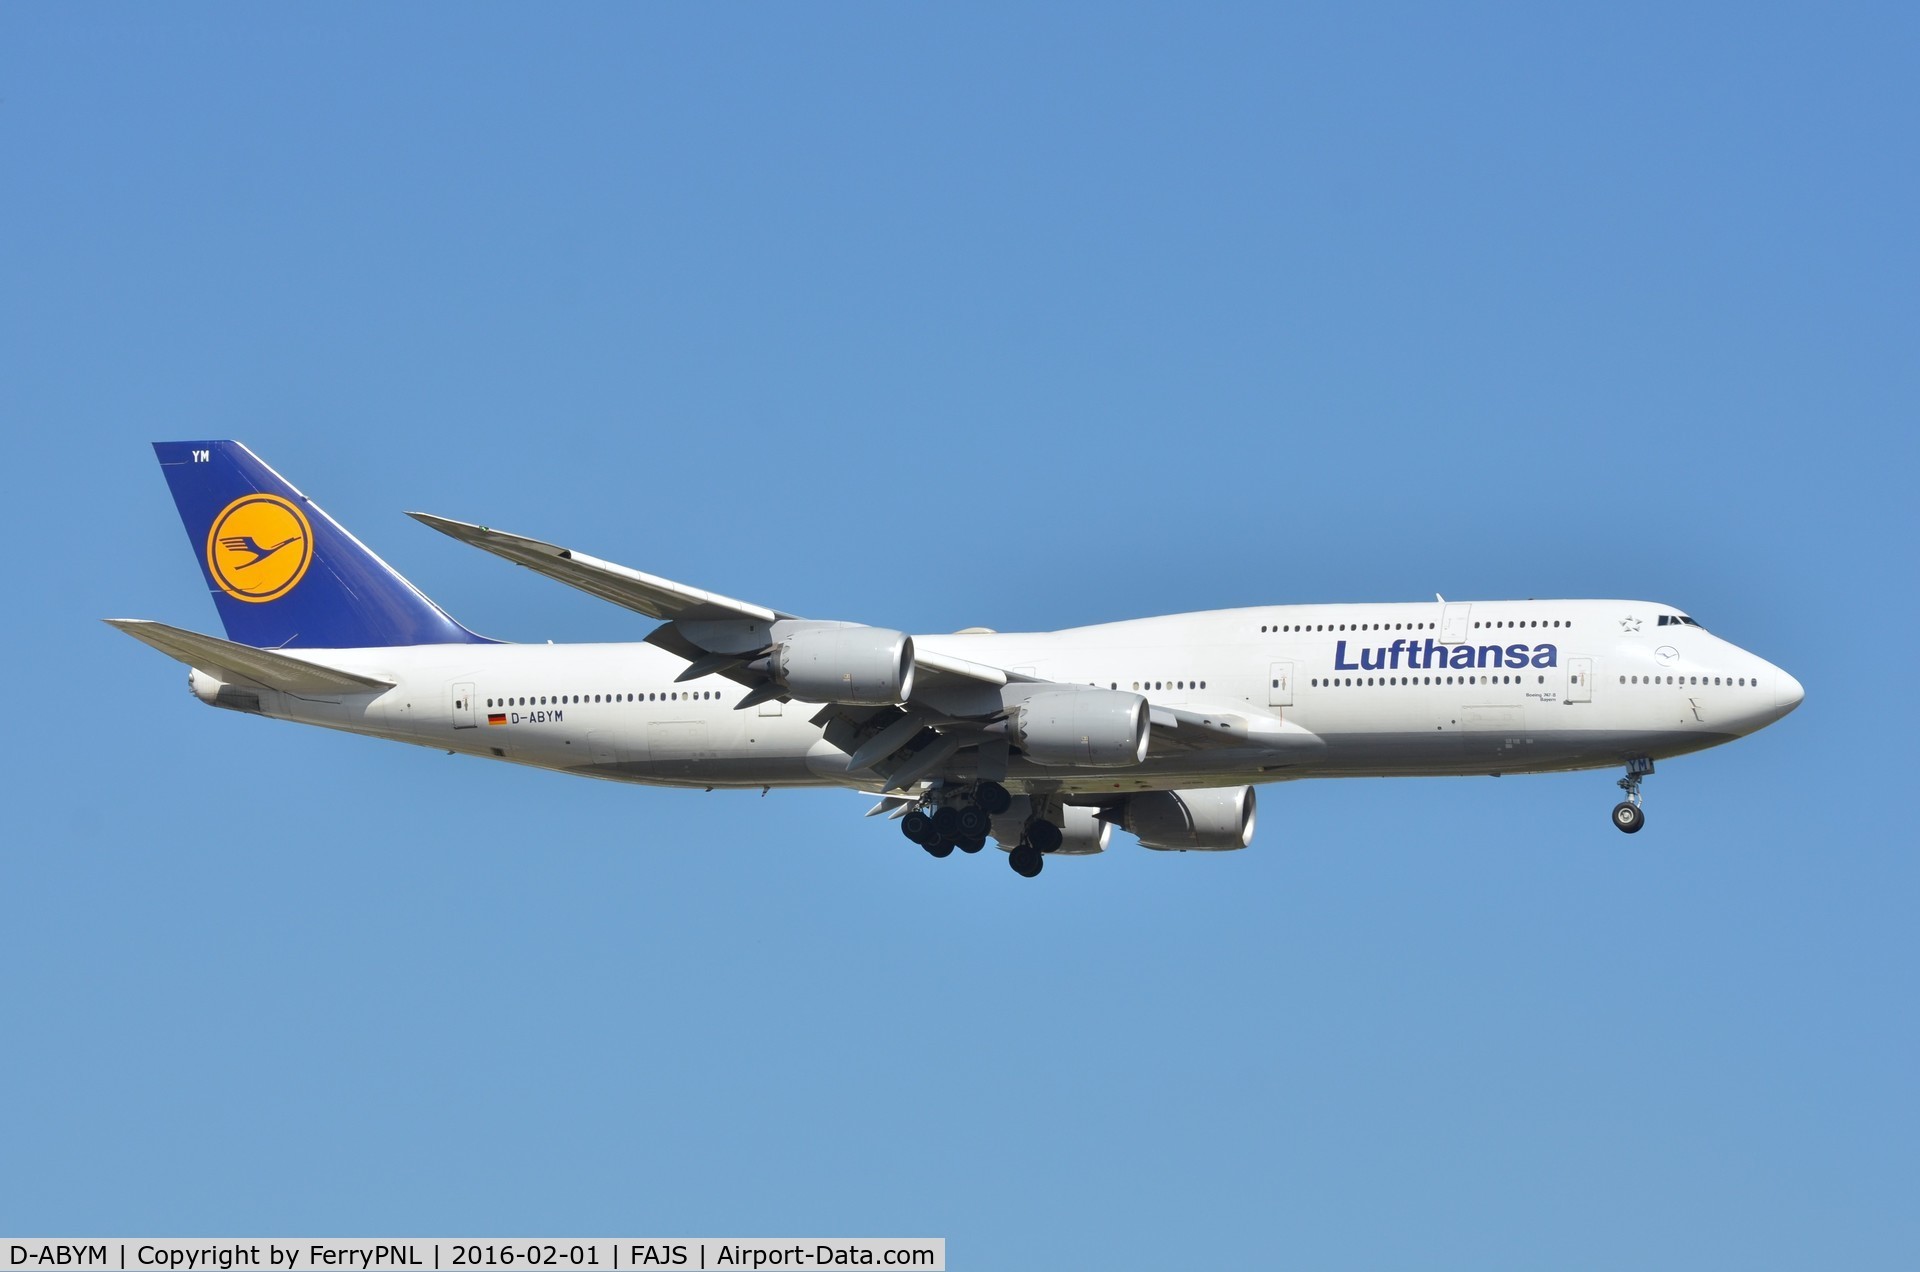 D-ABYM, 2014 Boeing 747-830 C/N 37837, Lufthansa B748 landing in JNB.